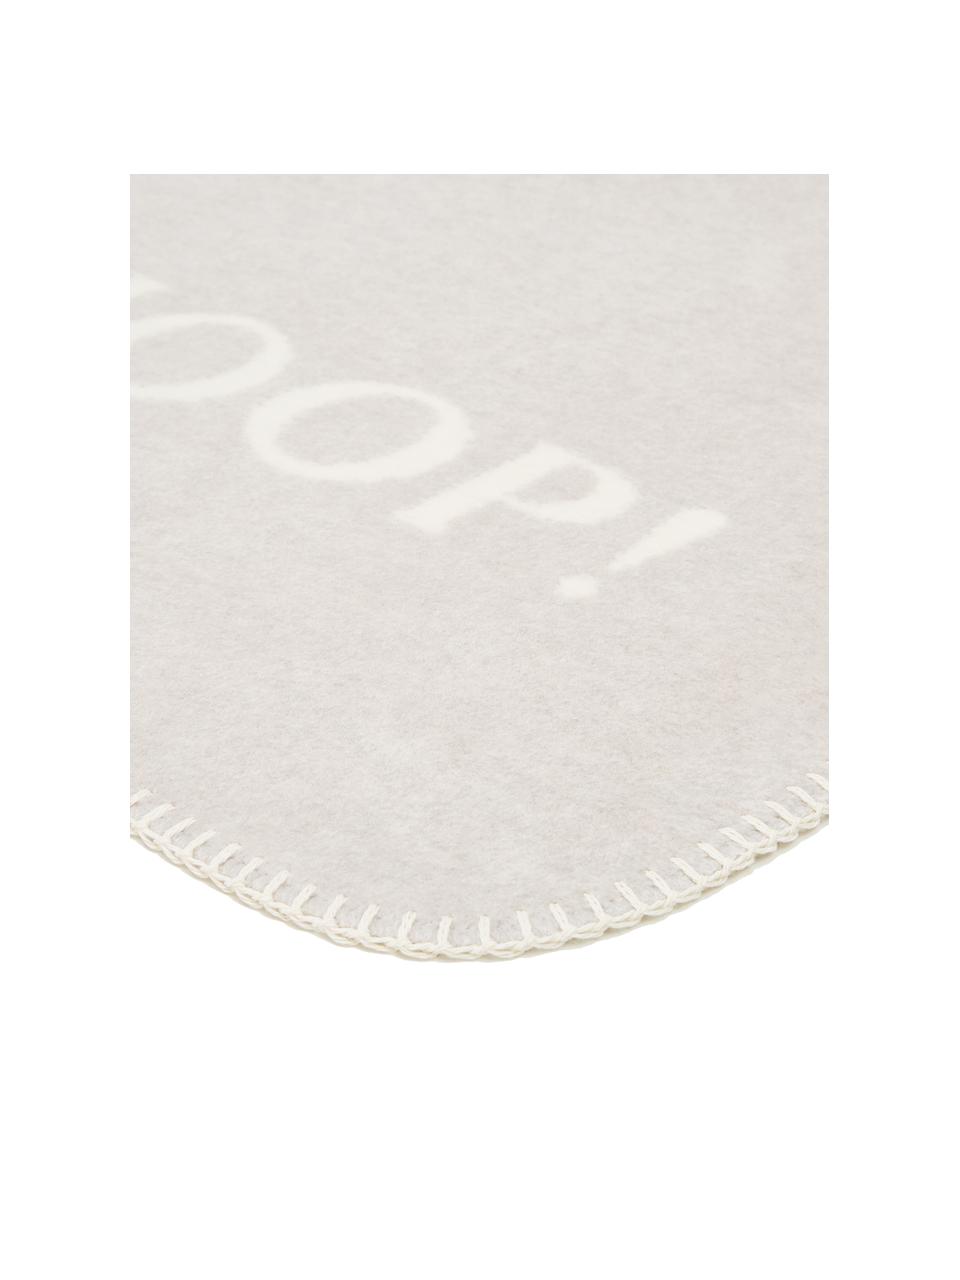 Dubbelzijdige fleece plaid universeel Doubleface in lichtgrijs en ecru, 58% katoen, 35% polyacryl, 7% polyester, Grijs, ecru, 150 x 200 cm